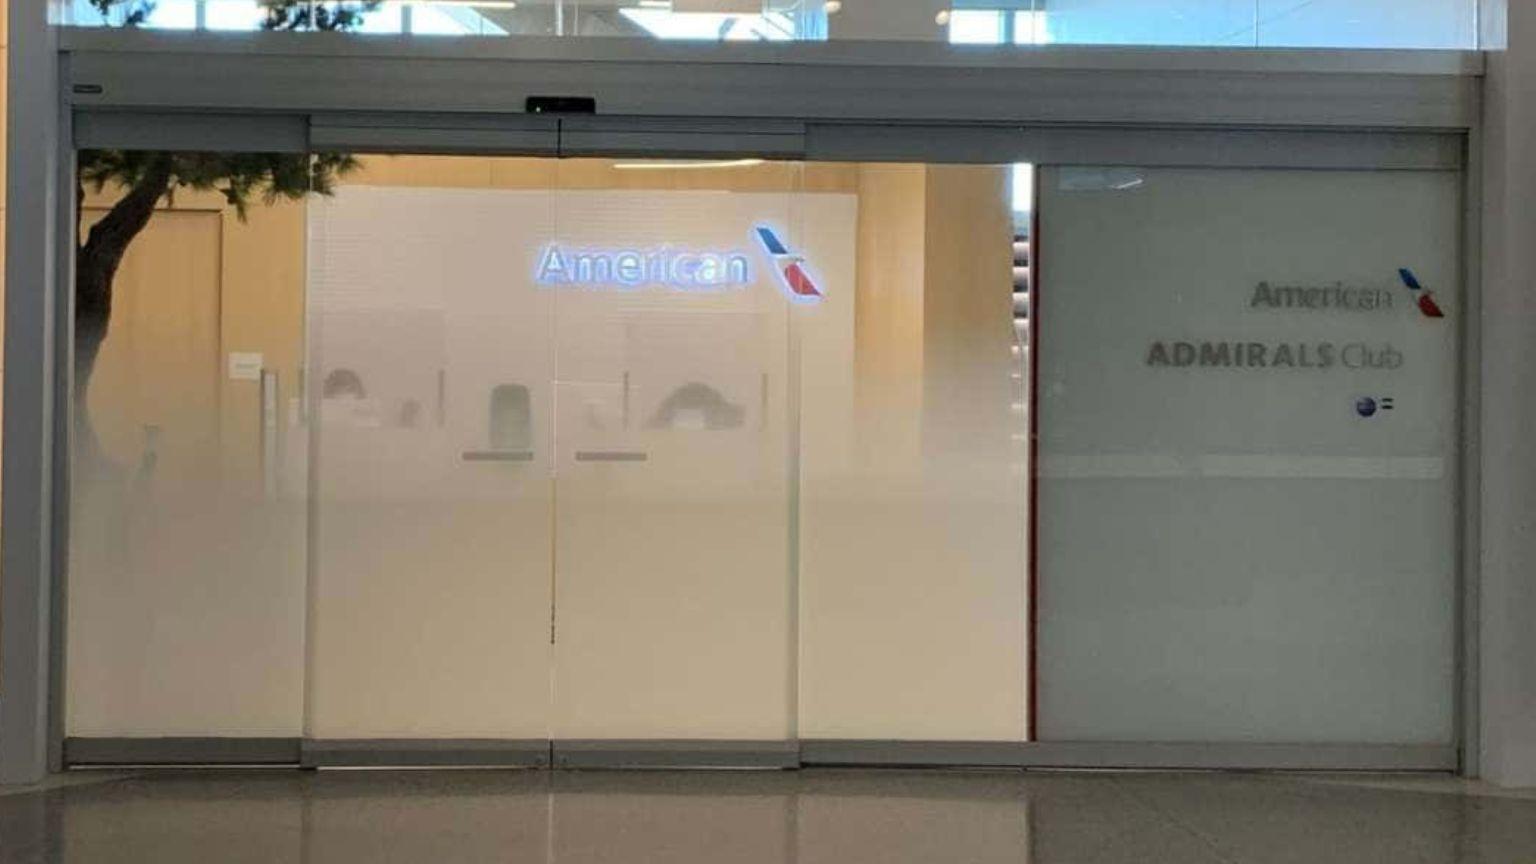 American Airlines Admirals Club SFO Lounge, Terminal 1